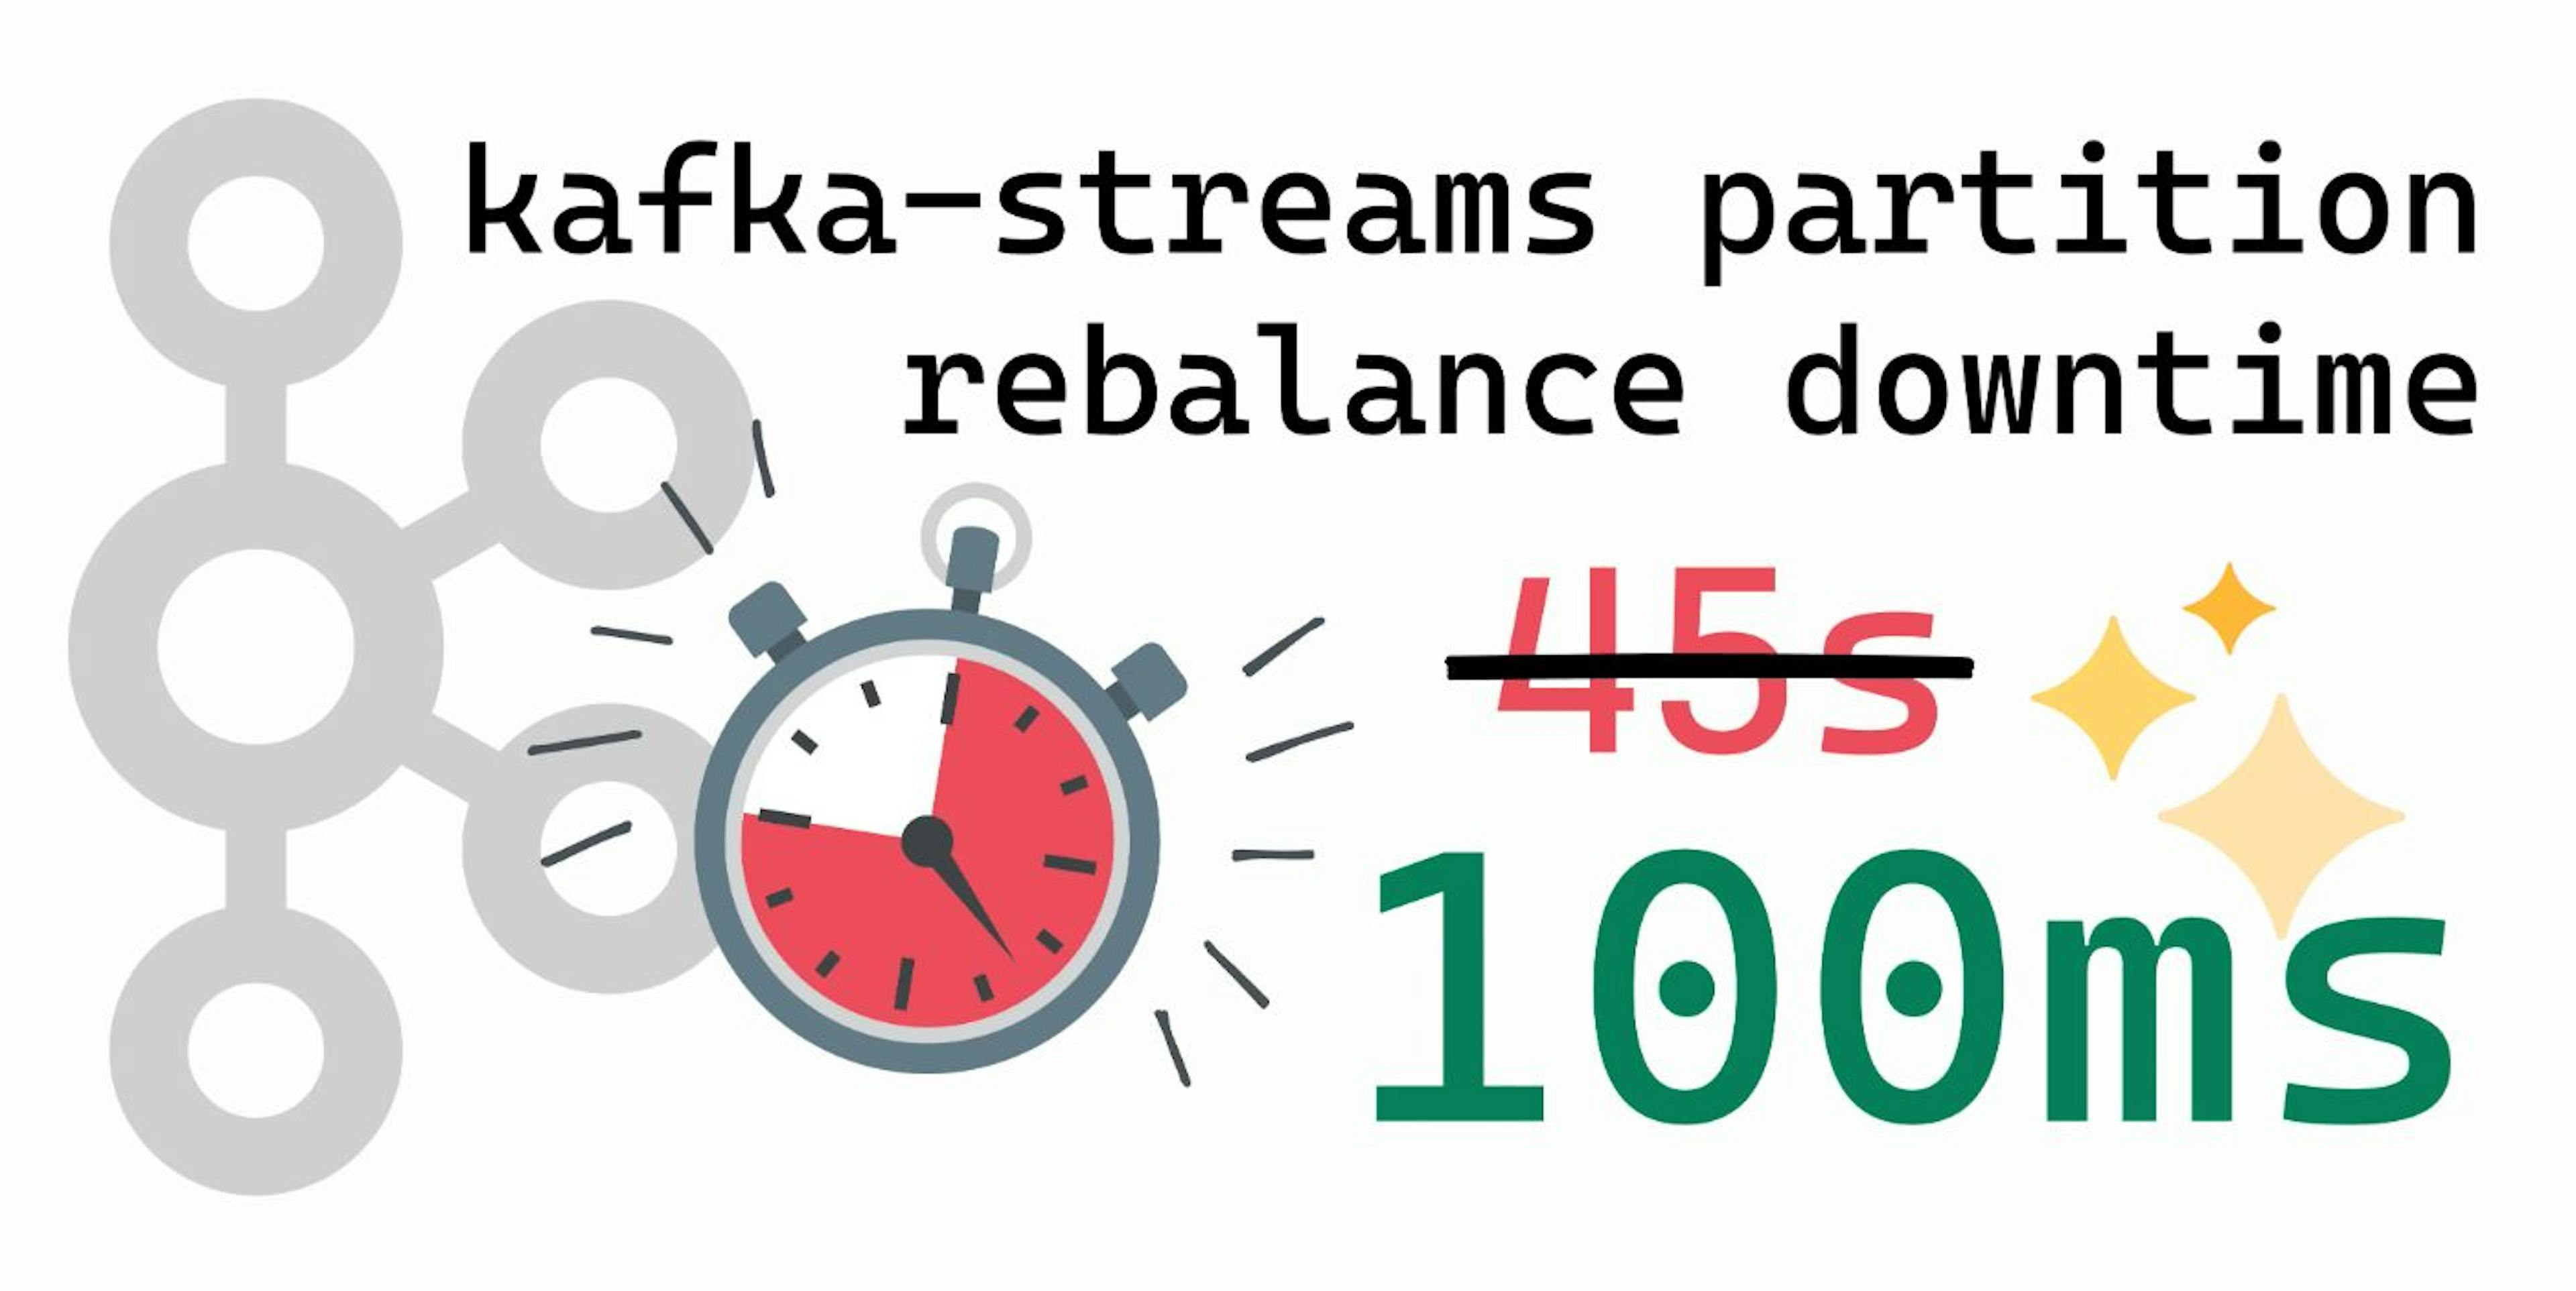 featured image - Minimizing Rebalance Downtime: Optimizing Stateless Kafka Streams Apps (x450)